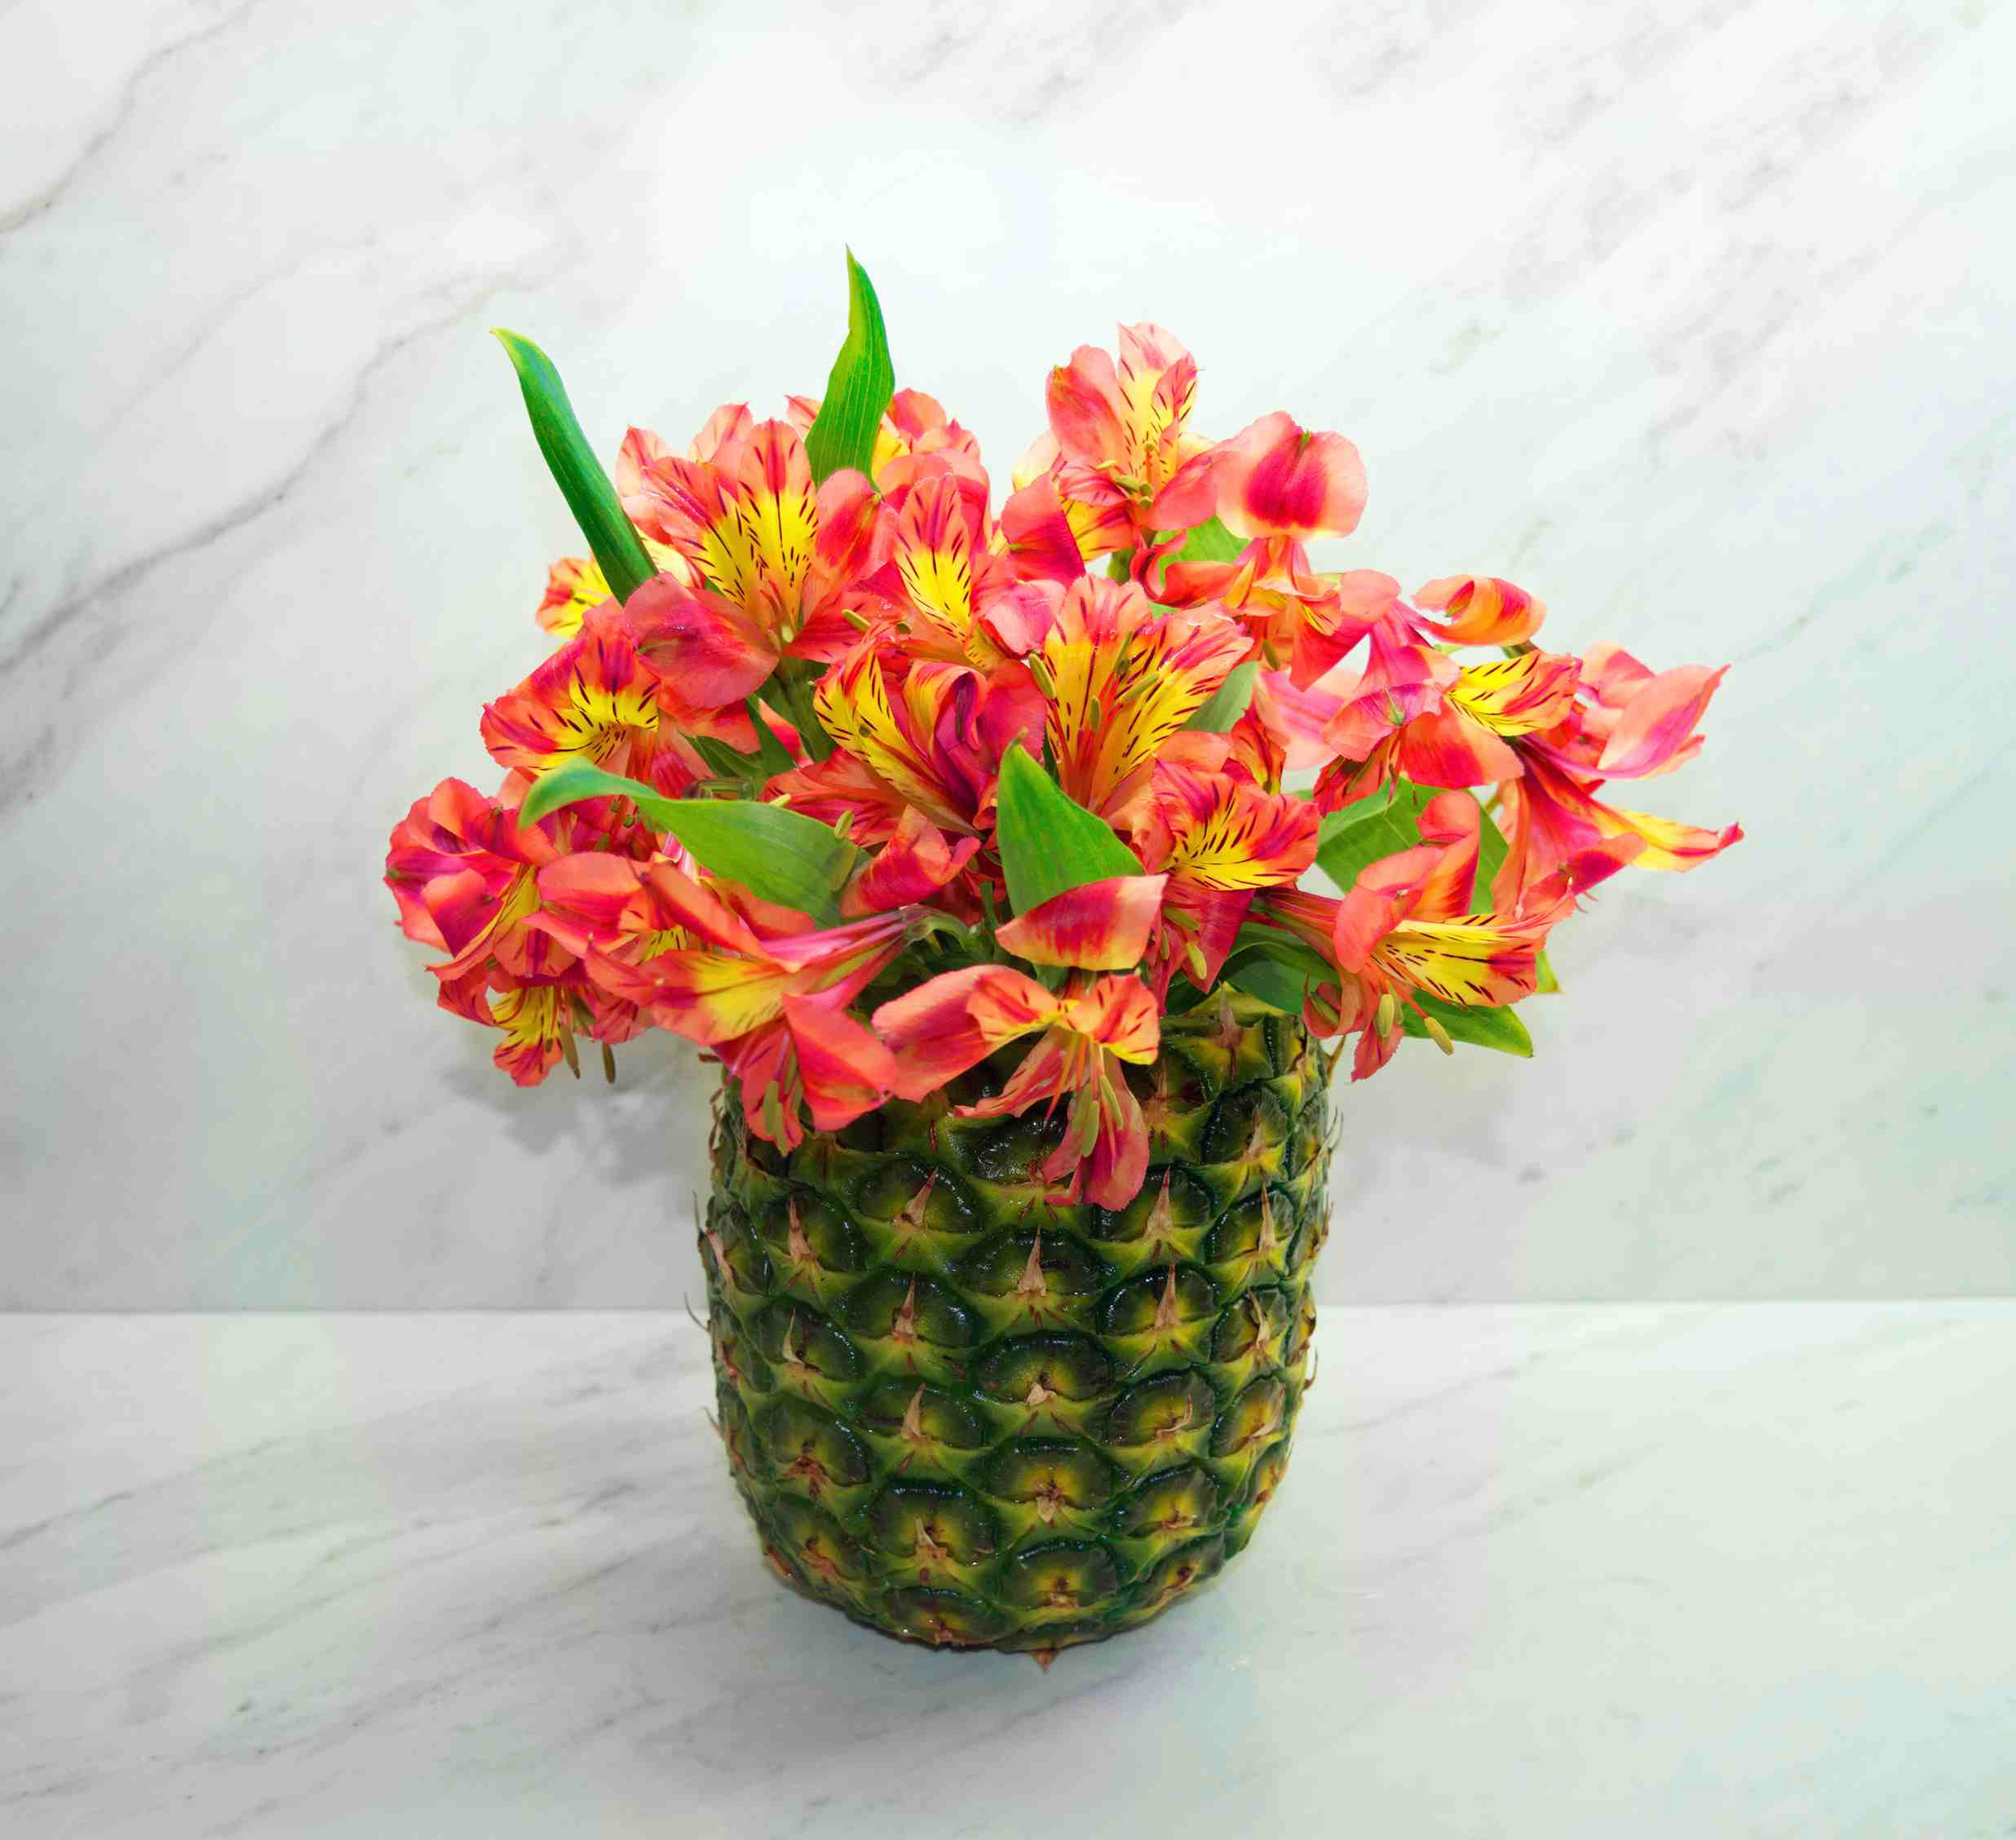 How to Hold Artificial Flowers In A Vase Of Diy Pineapple Vase Floral Arrangement Regarding Diy Pineapple Vase 56a262c53df78cf77274f3c3